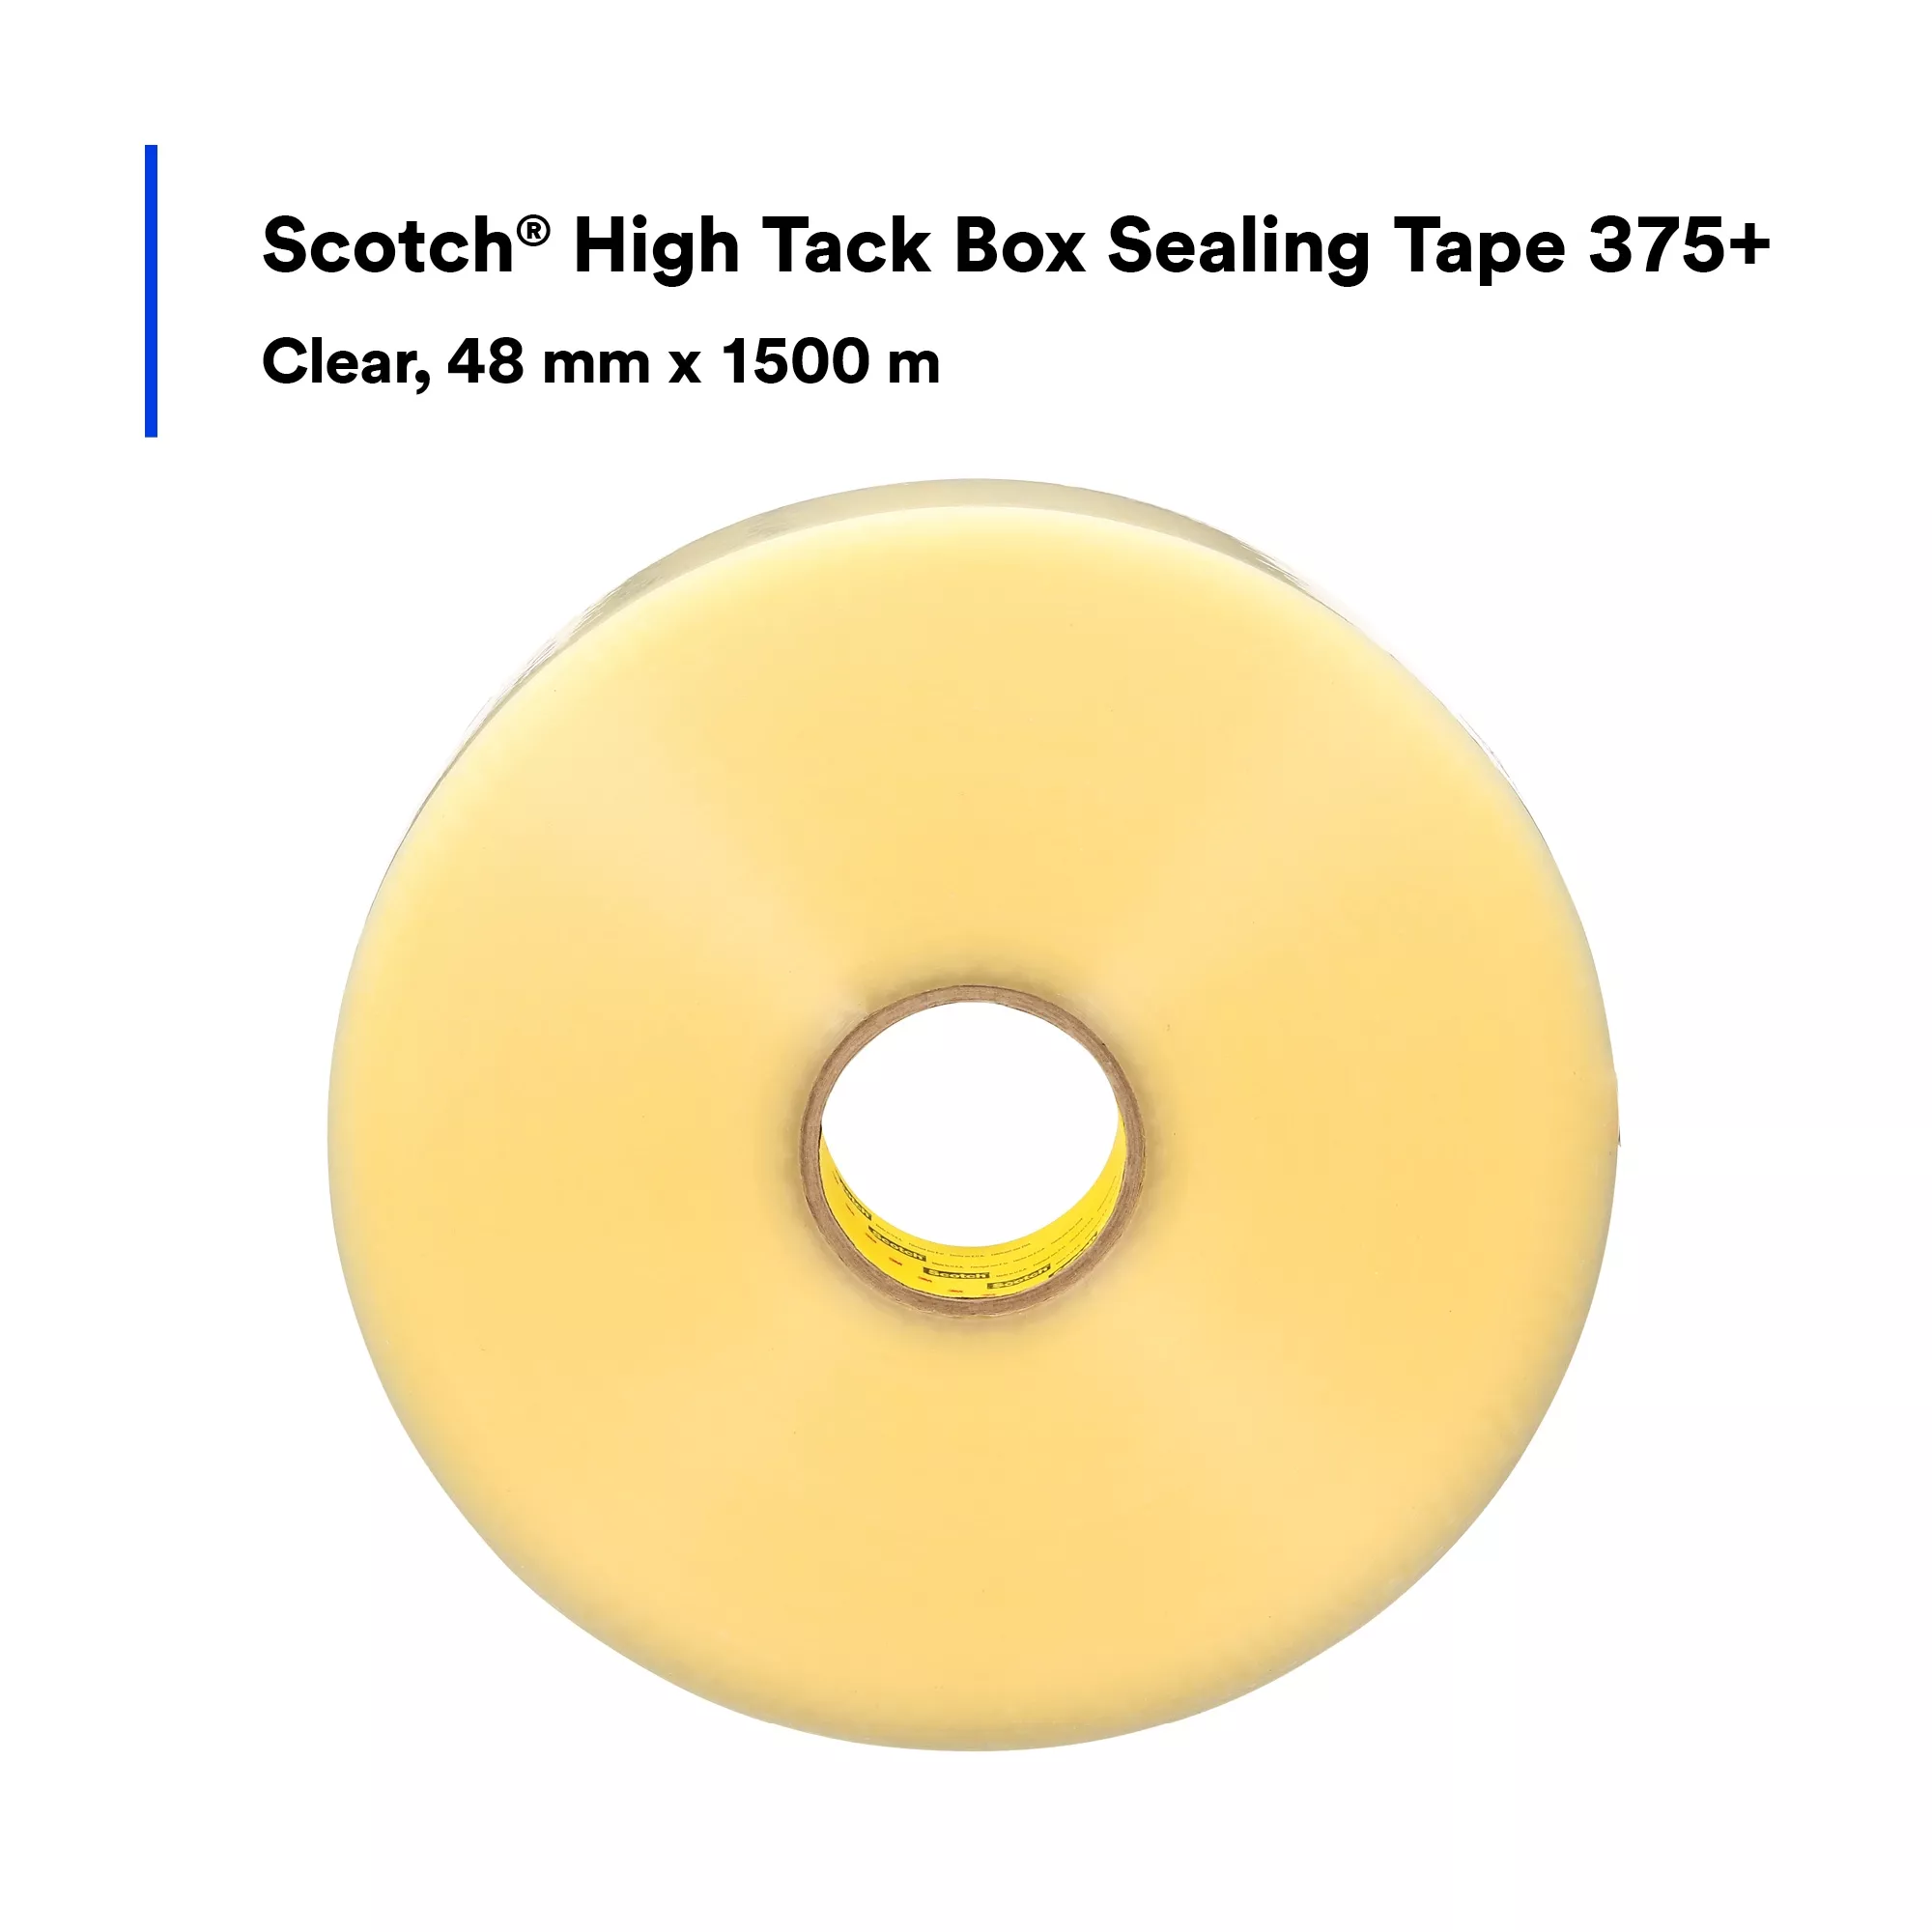 SKU 7100216427 | Scotch® High Tack Box Sealing Tape 375+